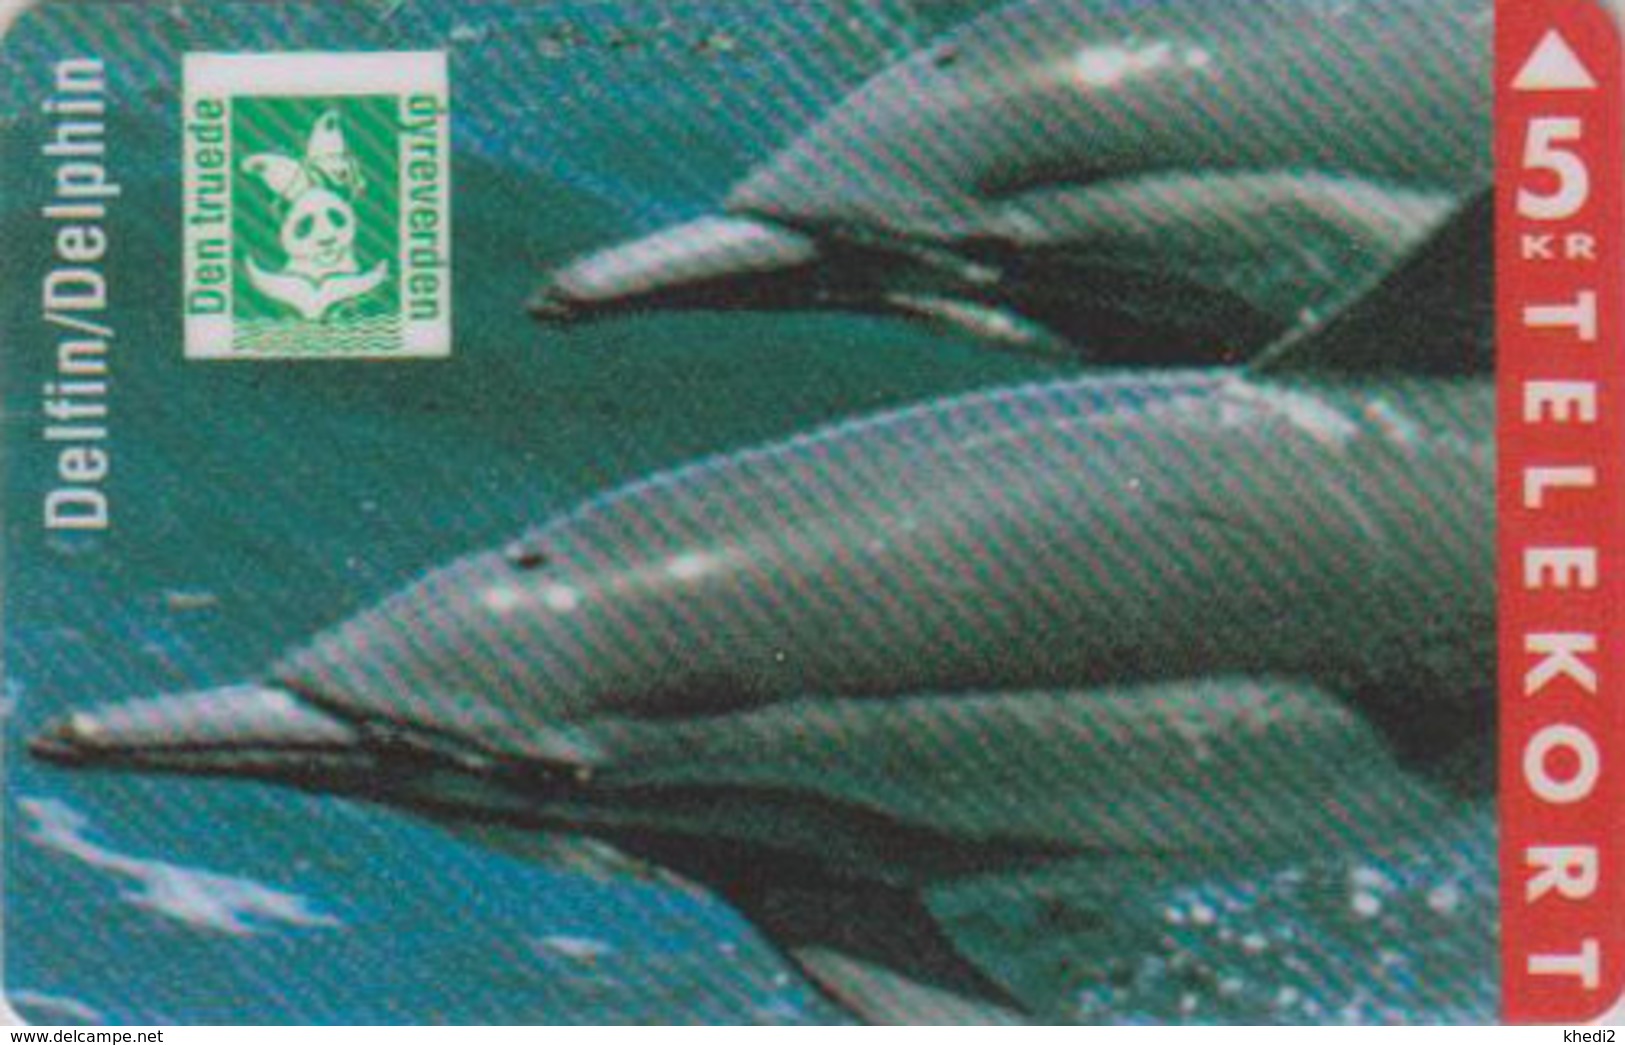 Télécarte Du Puzzle EMISSION CONJOINTE ** ENDANGERED WILDLIFE ** - Danemark - Animal - DAUPHIN - DOLPHIN - DELFIN - Delfines